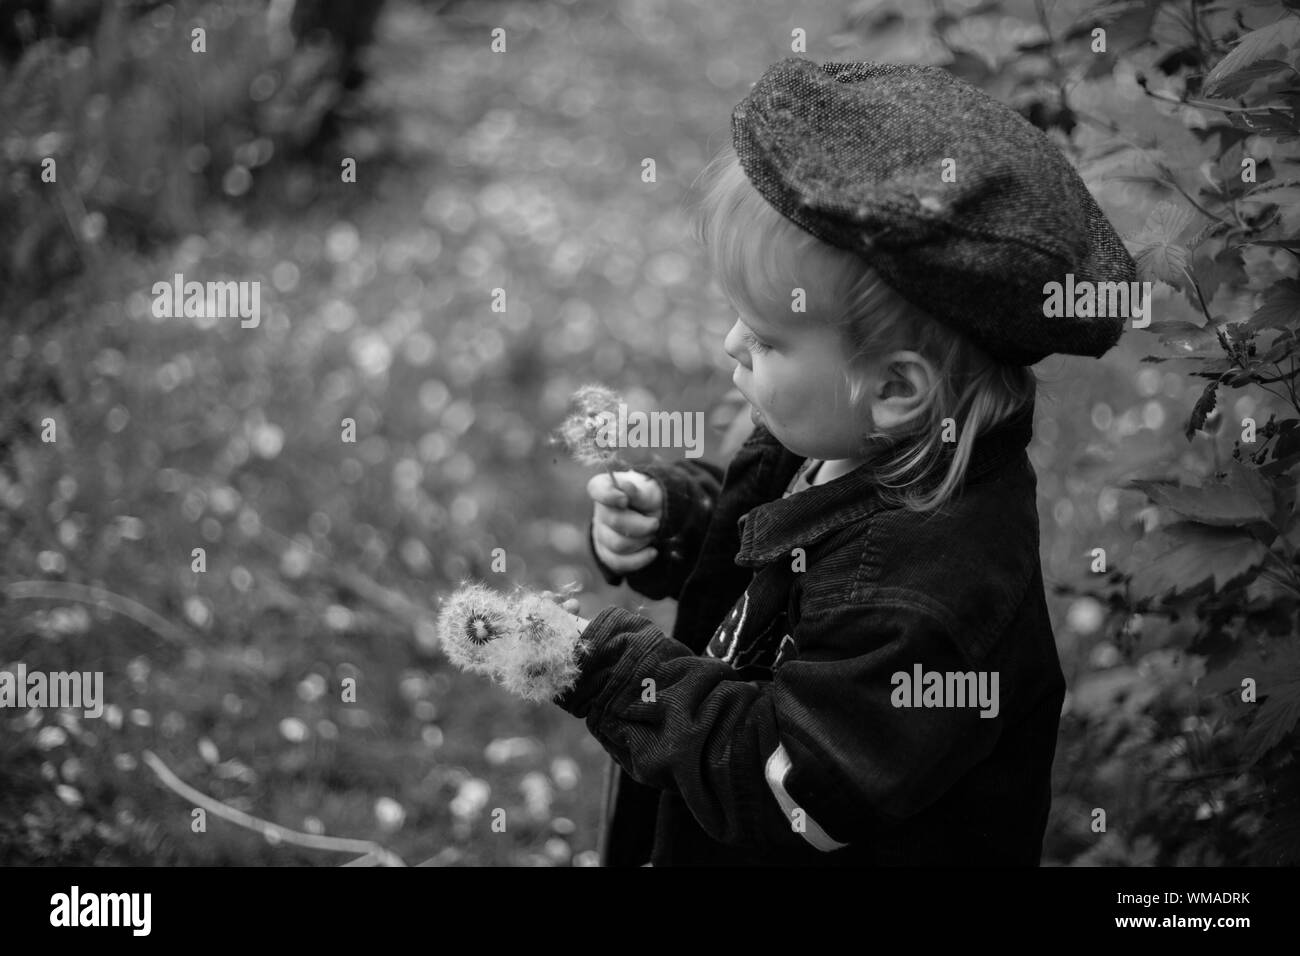 Portrait Of Child With Dandelions Stock Photo